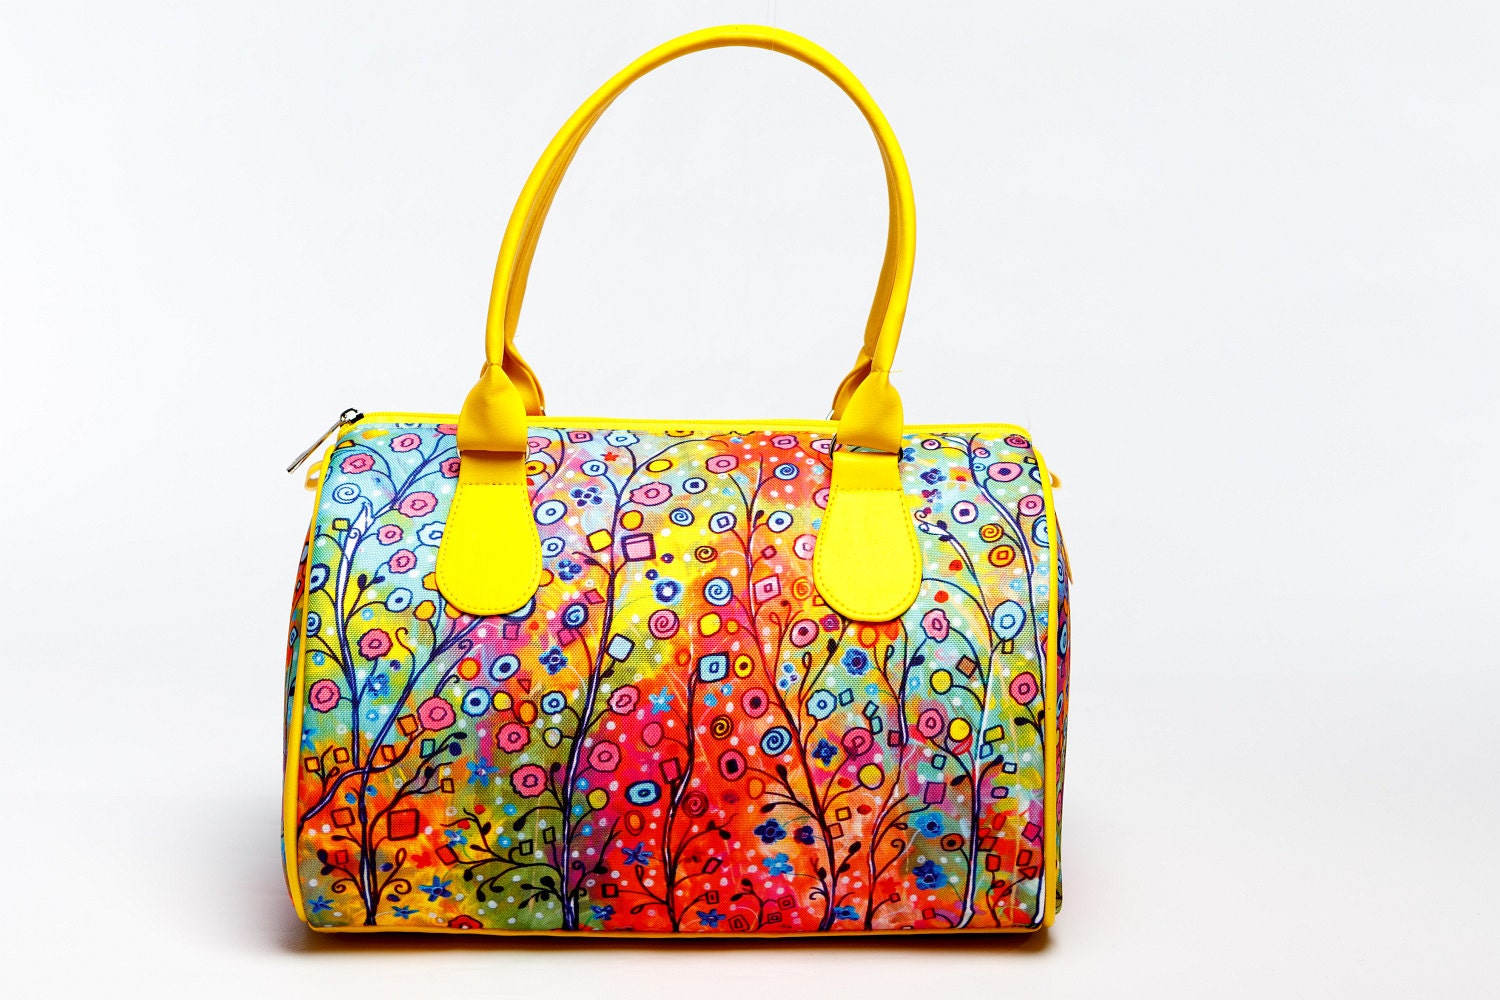 Bright Yellow Summer Handbag with Flower Print by MyBrightBag